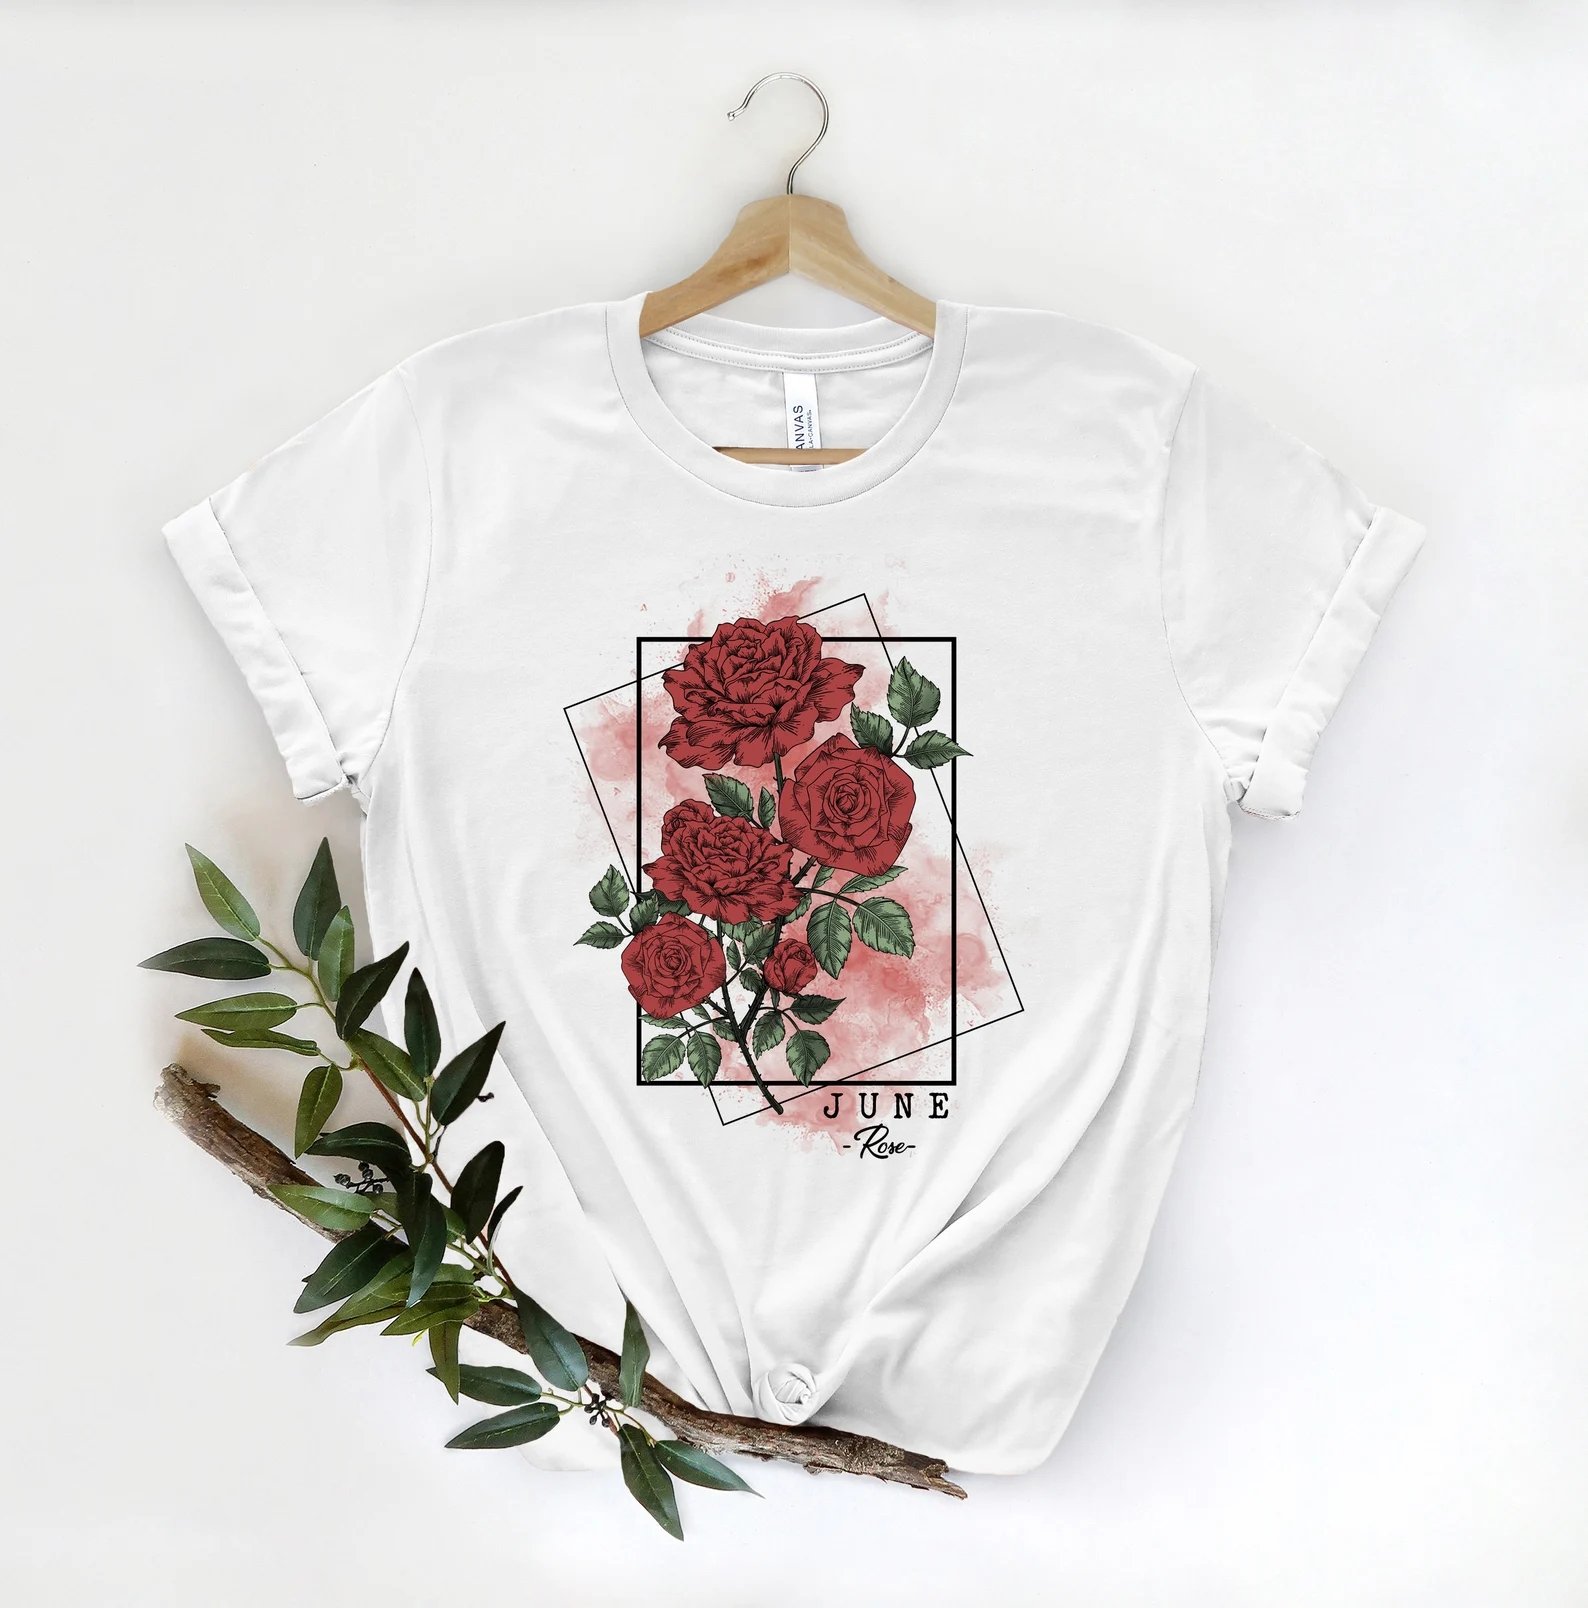 9.LUCKAPPARELUS Rose Flowers T-Shirt €16.70, 